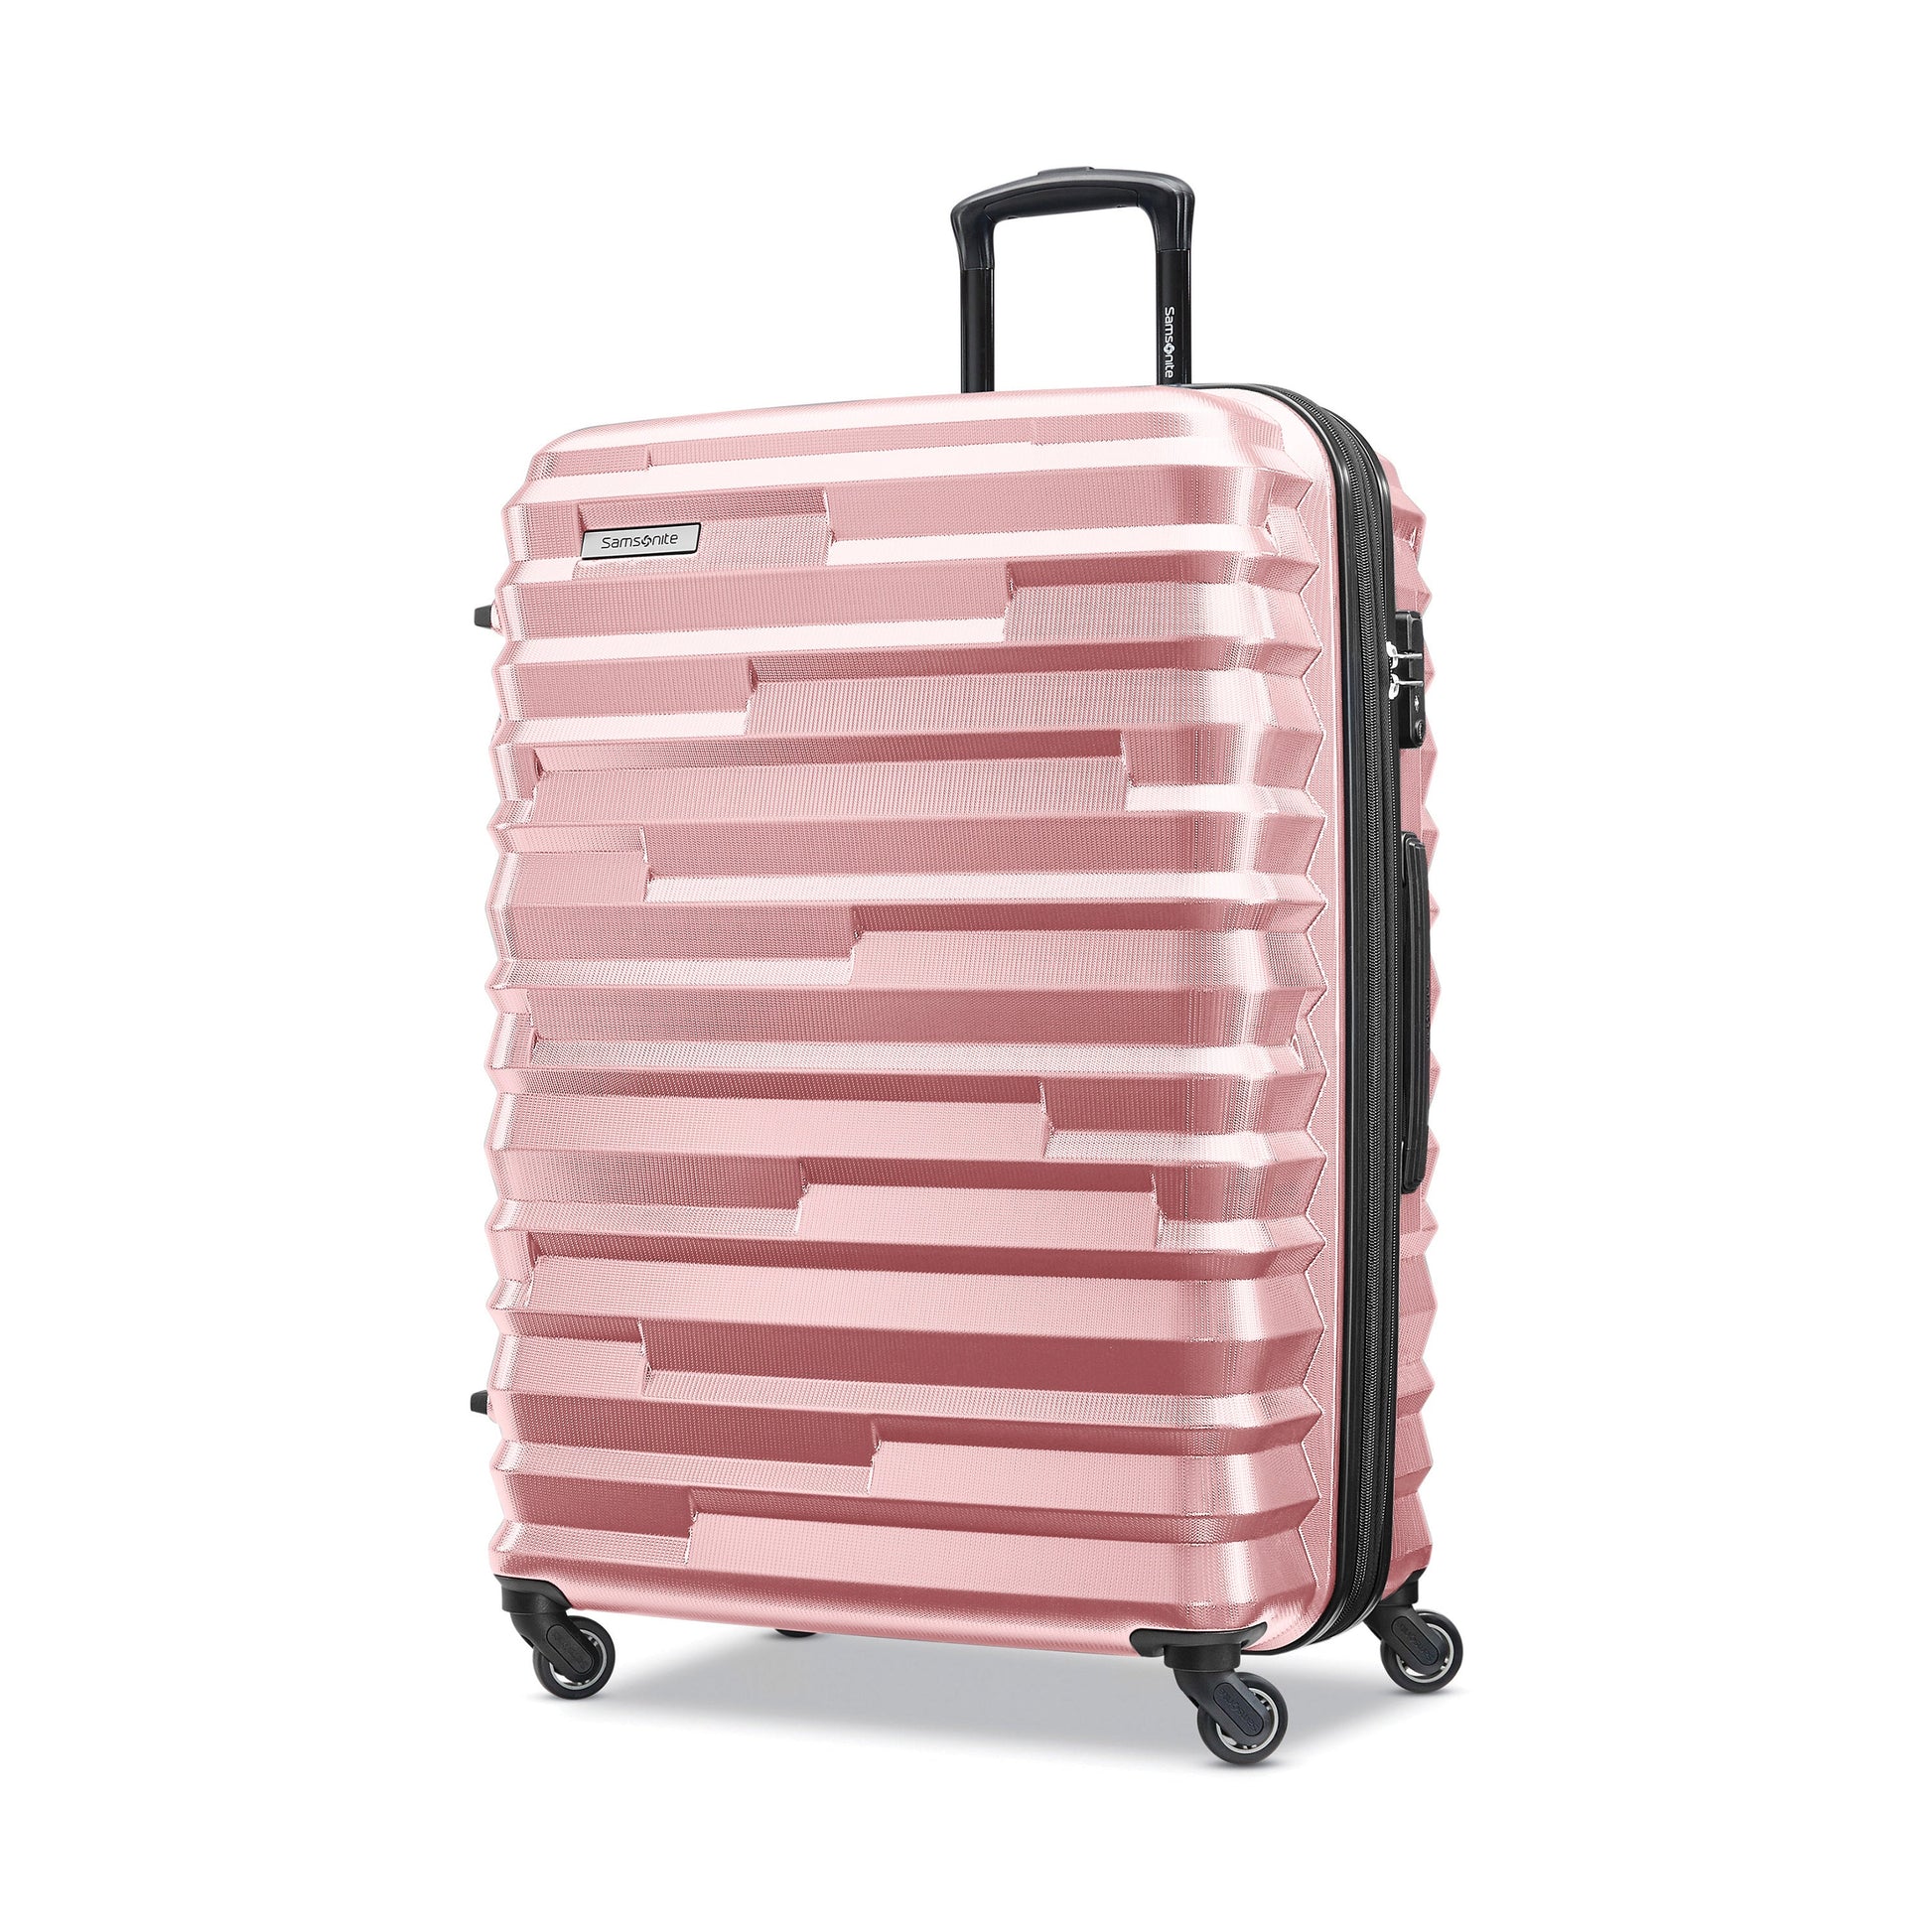 Samsonite Ziplite 4.0 Spinner Large Expandable Luggage - Rose Gold